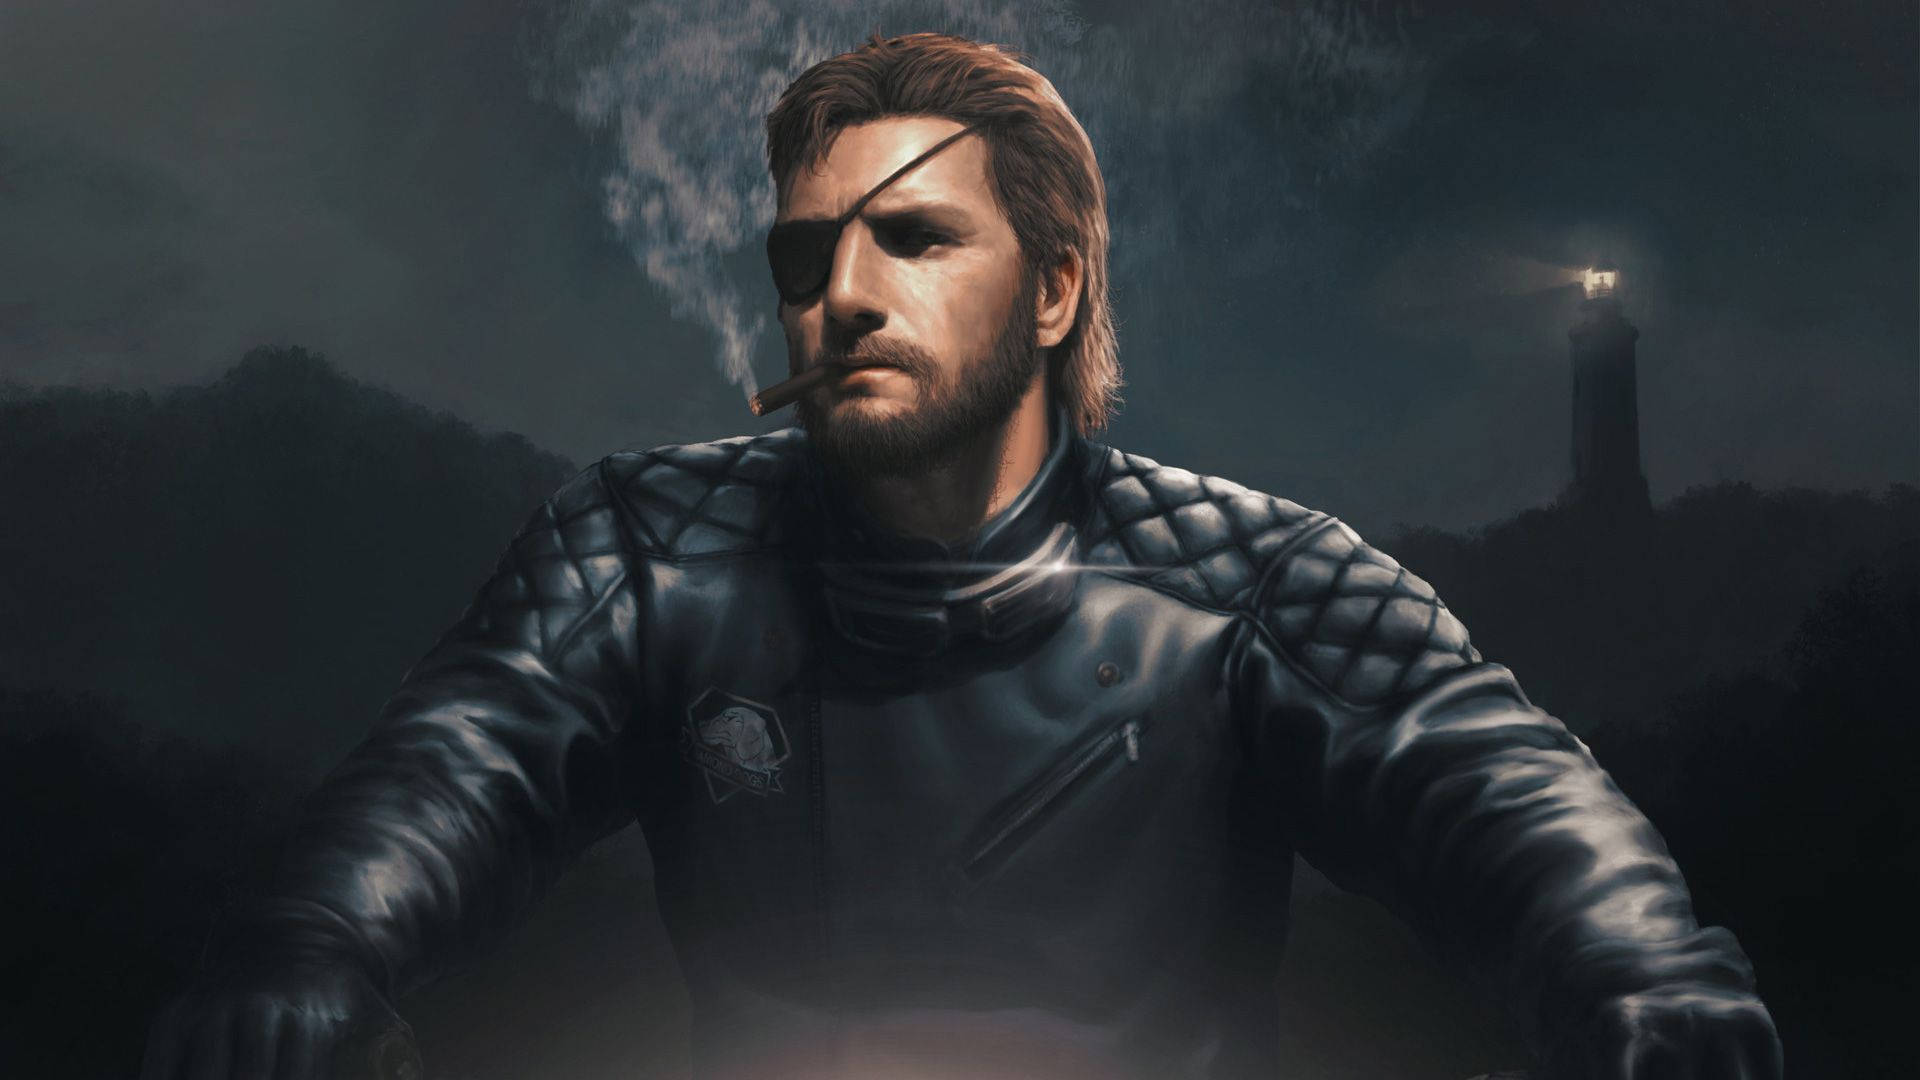 The Legendary Big Boss from ‘Metal Gear Solid’ Wallpaper